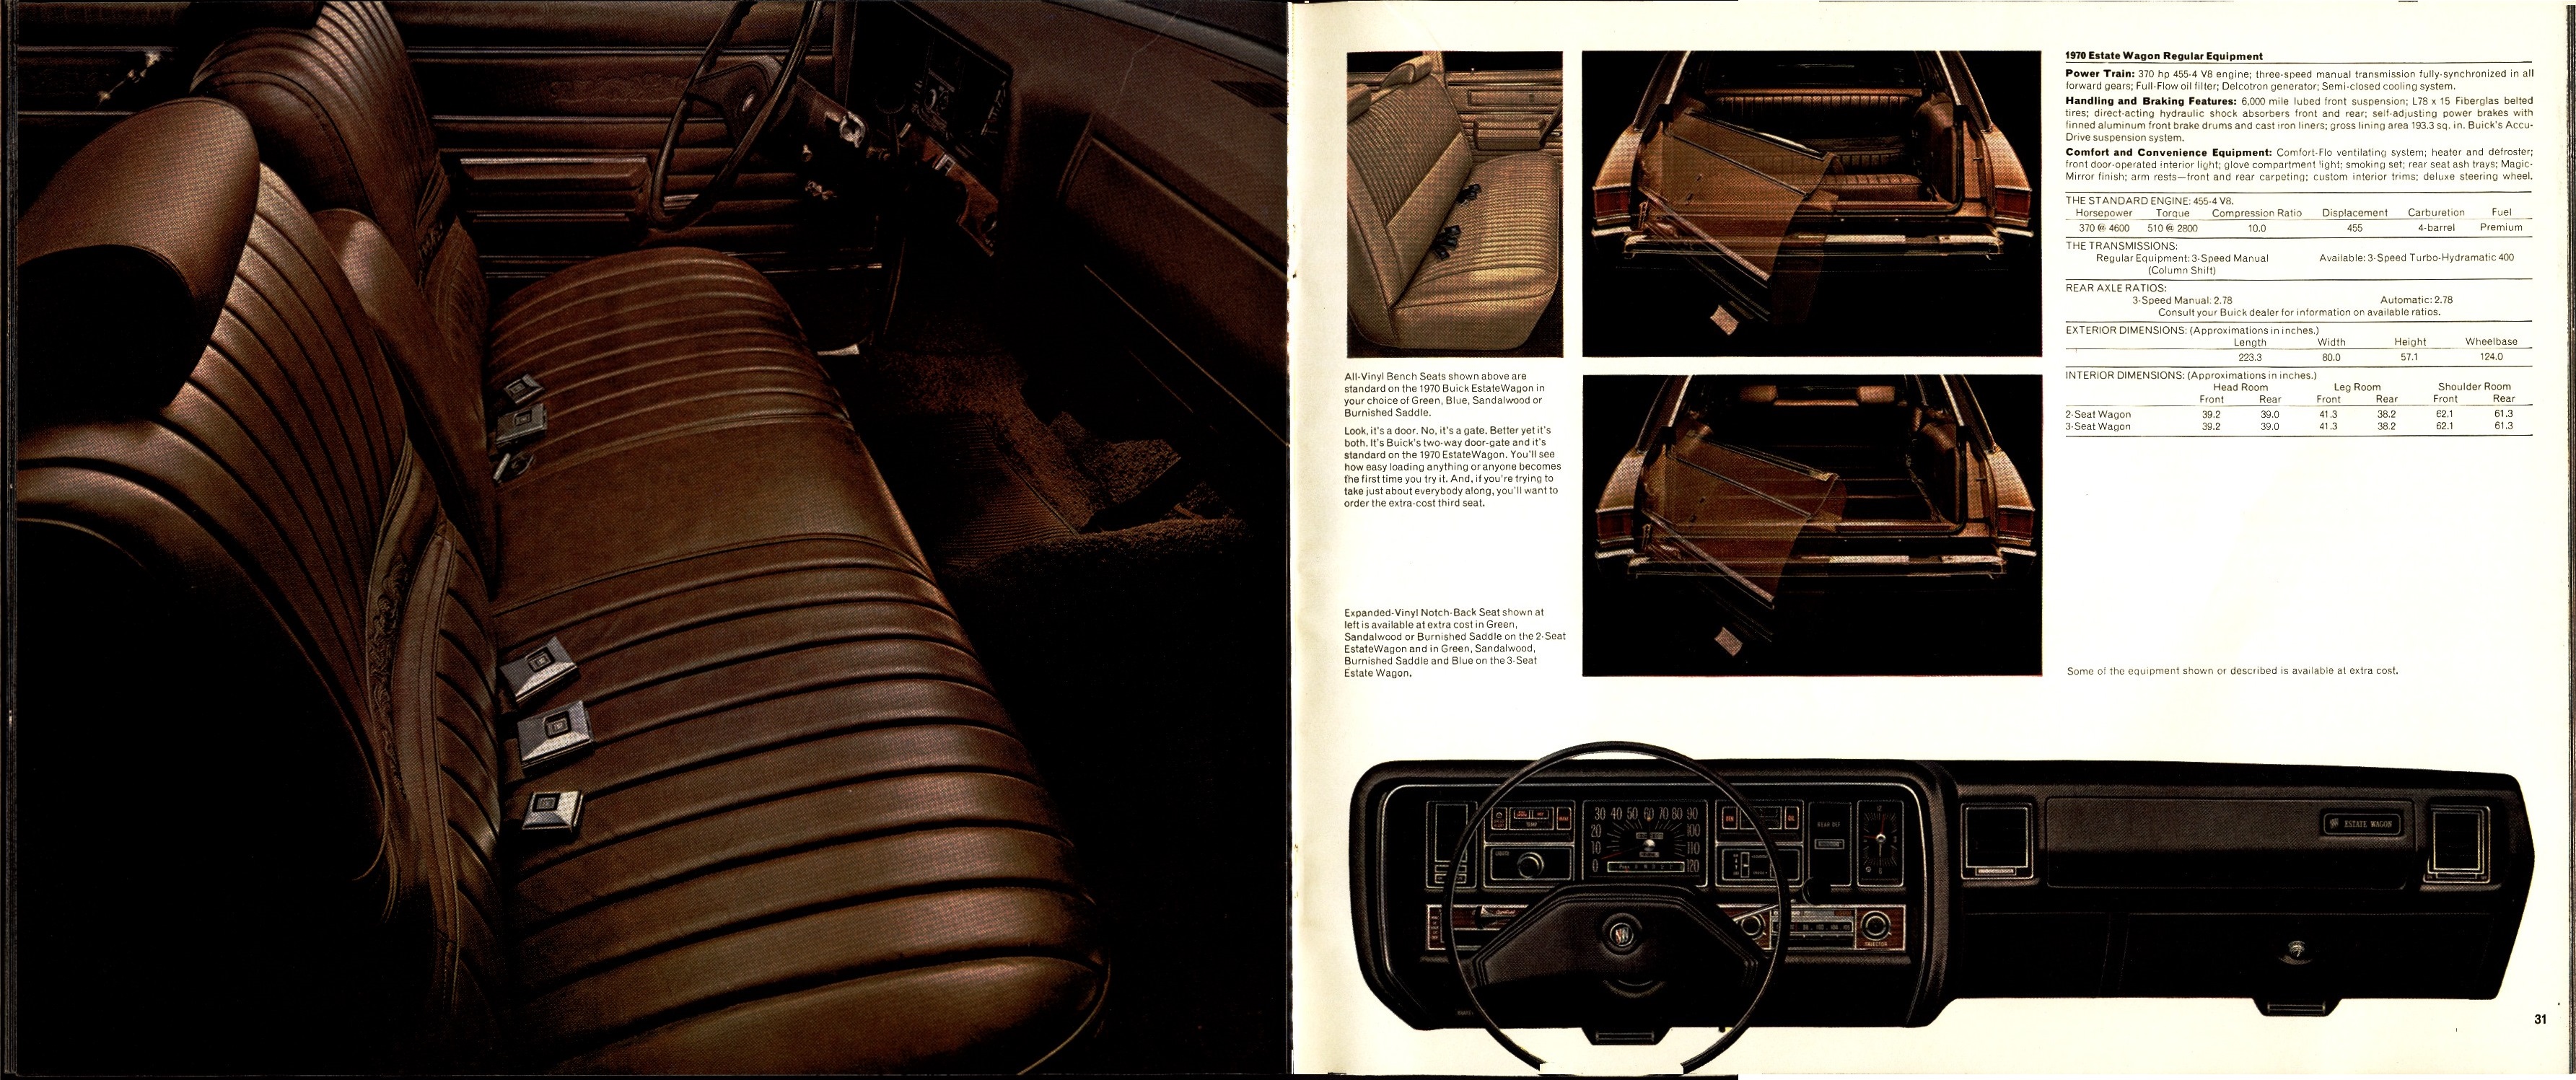 1970 Buick Full Line Prestige Brochure 30-31